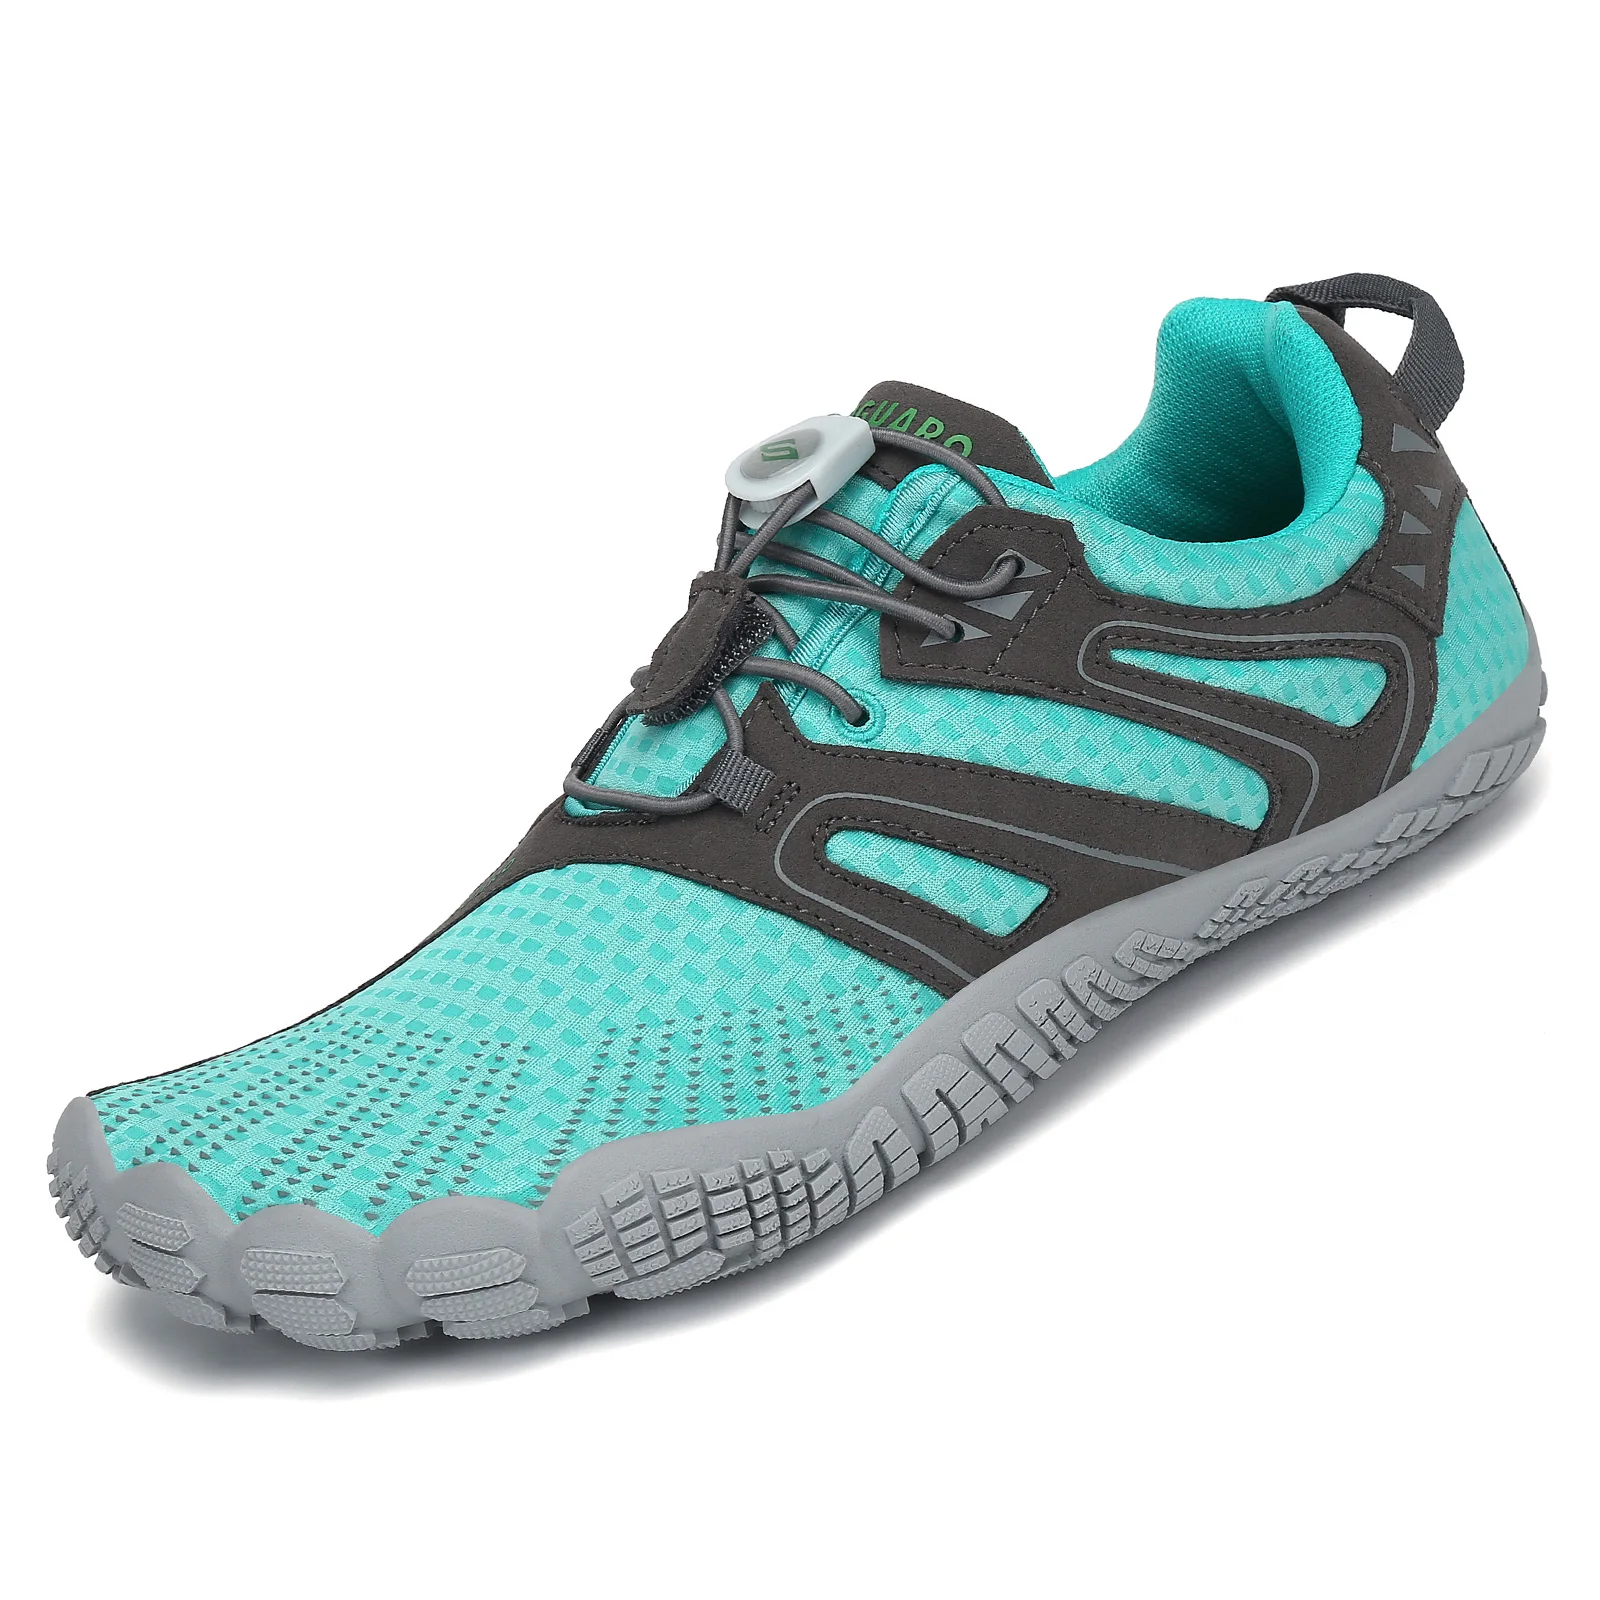 

Unisex Men or Women Fashion Yoga Barefoot Trail Gym Training Running Shoes, 10 colors